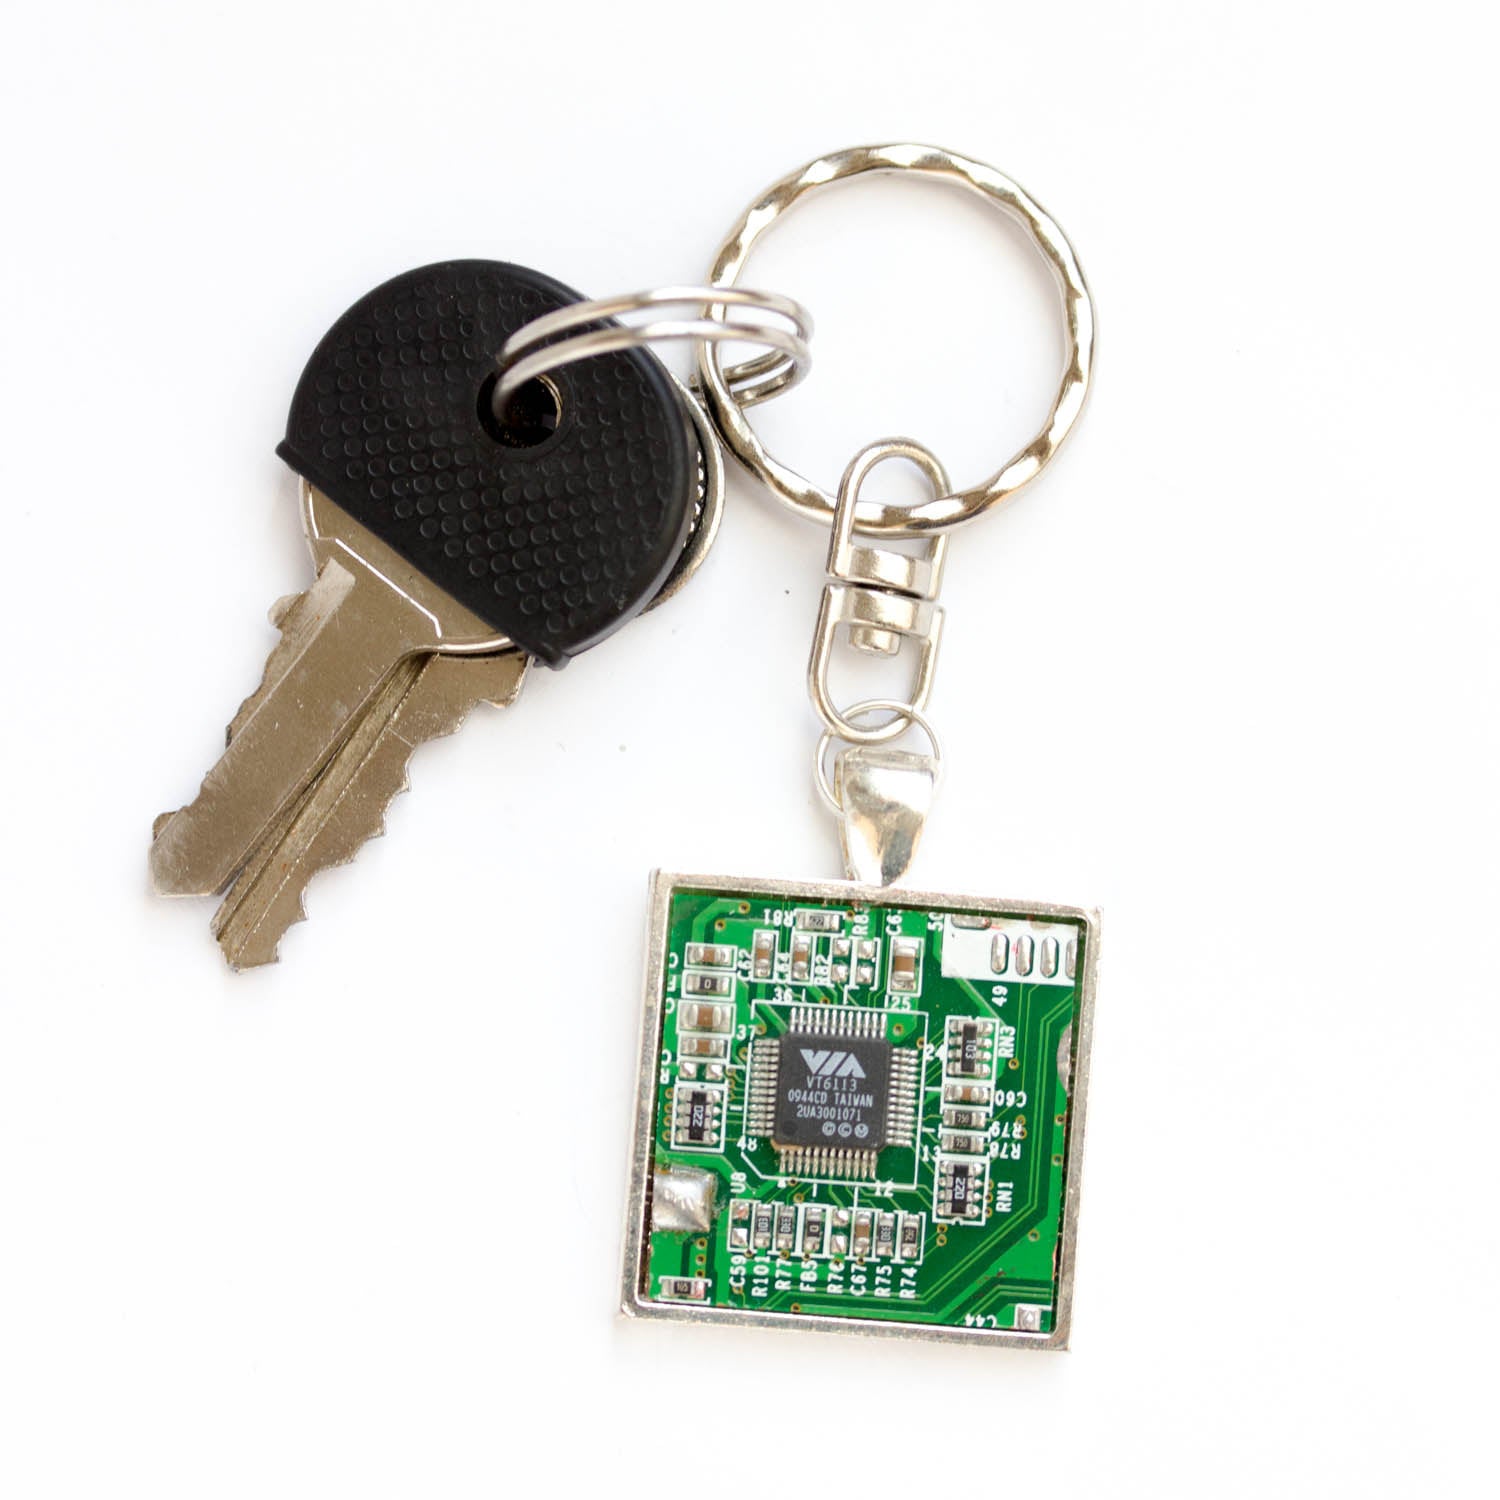 Men's keychain, circuit board keychain